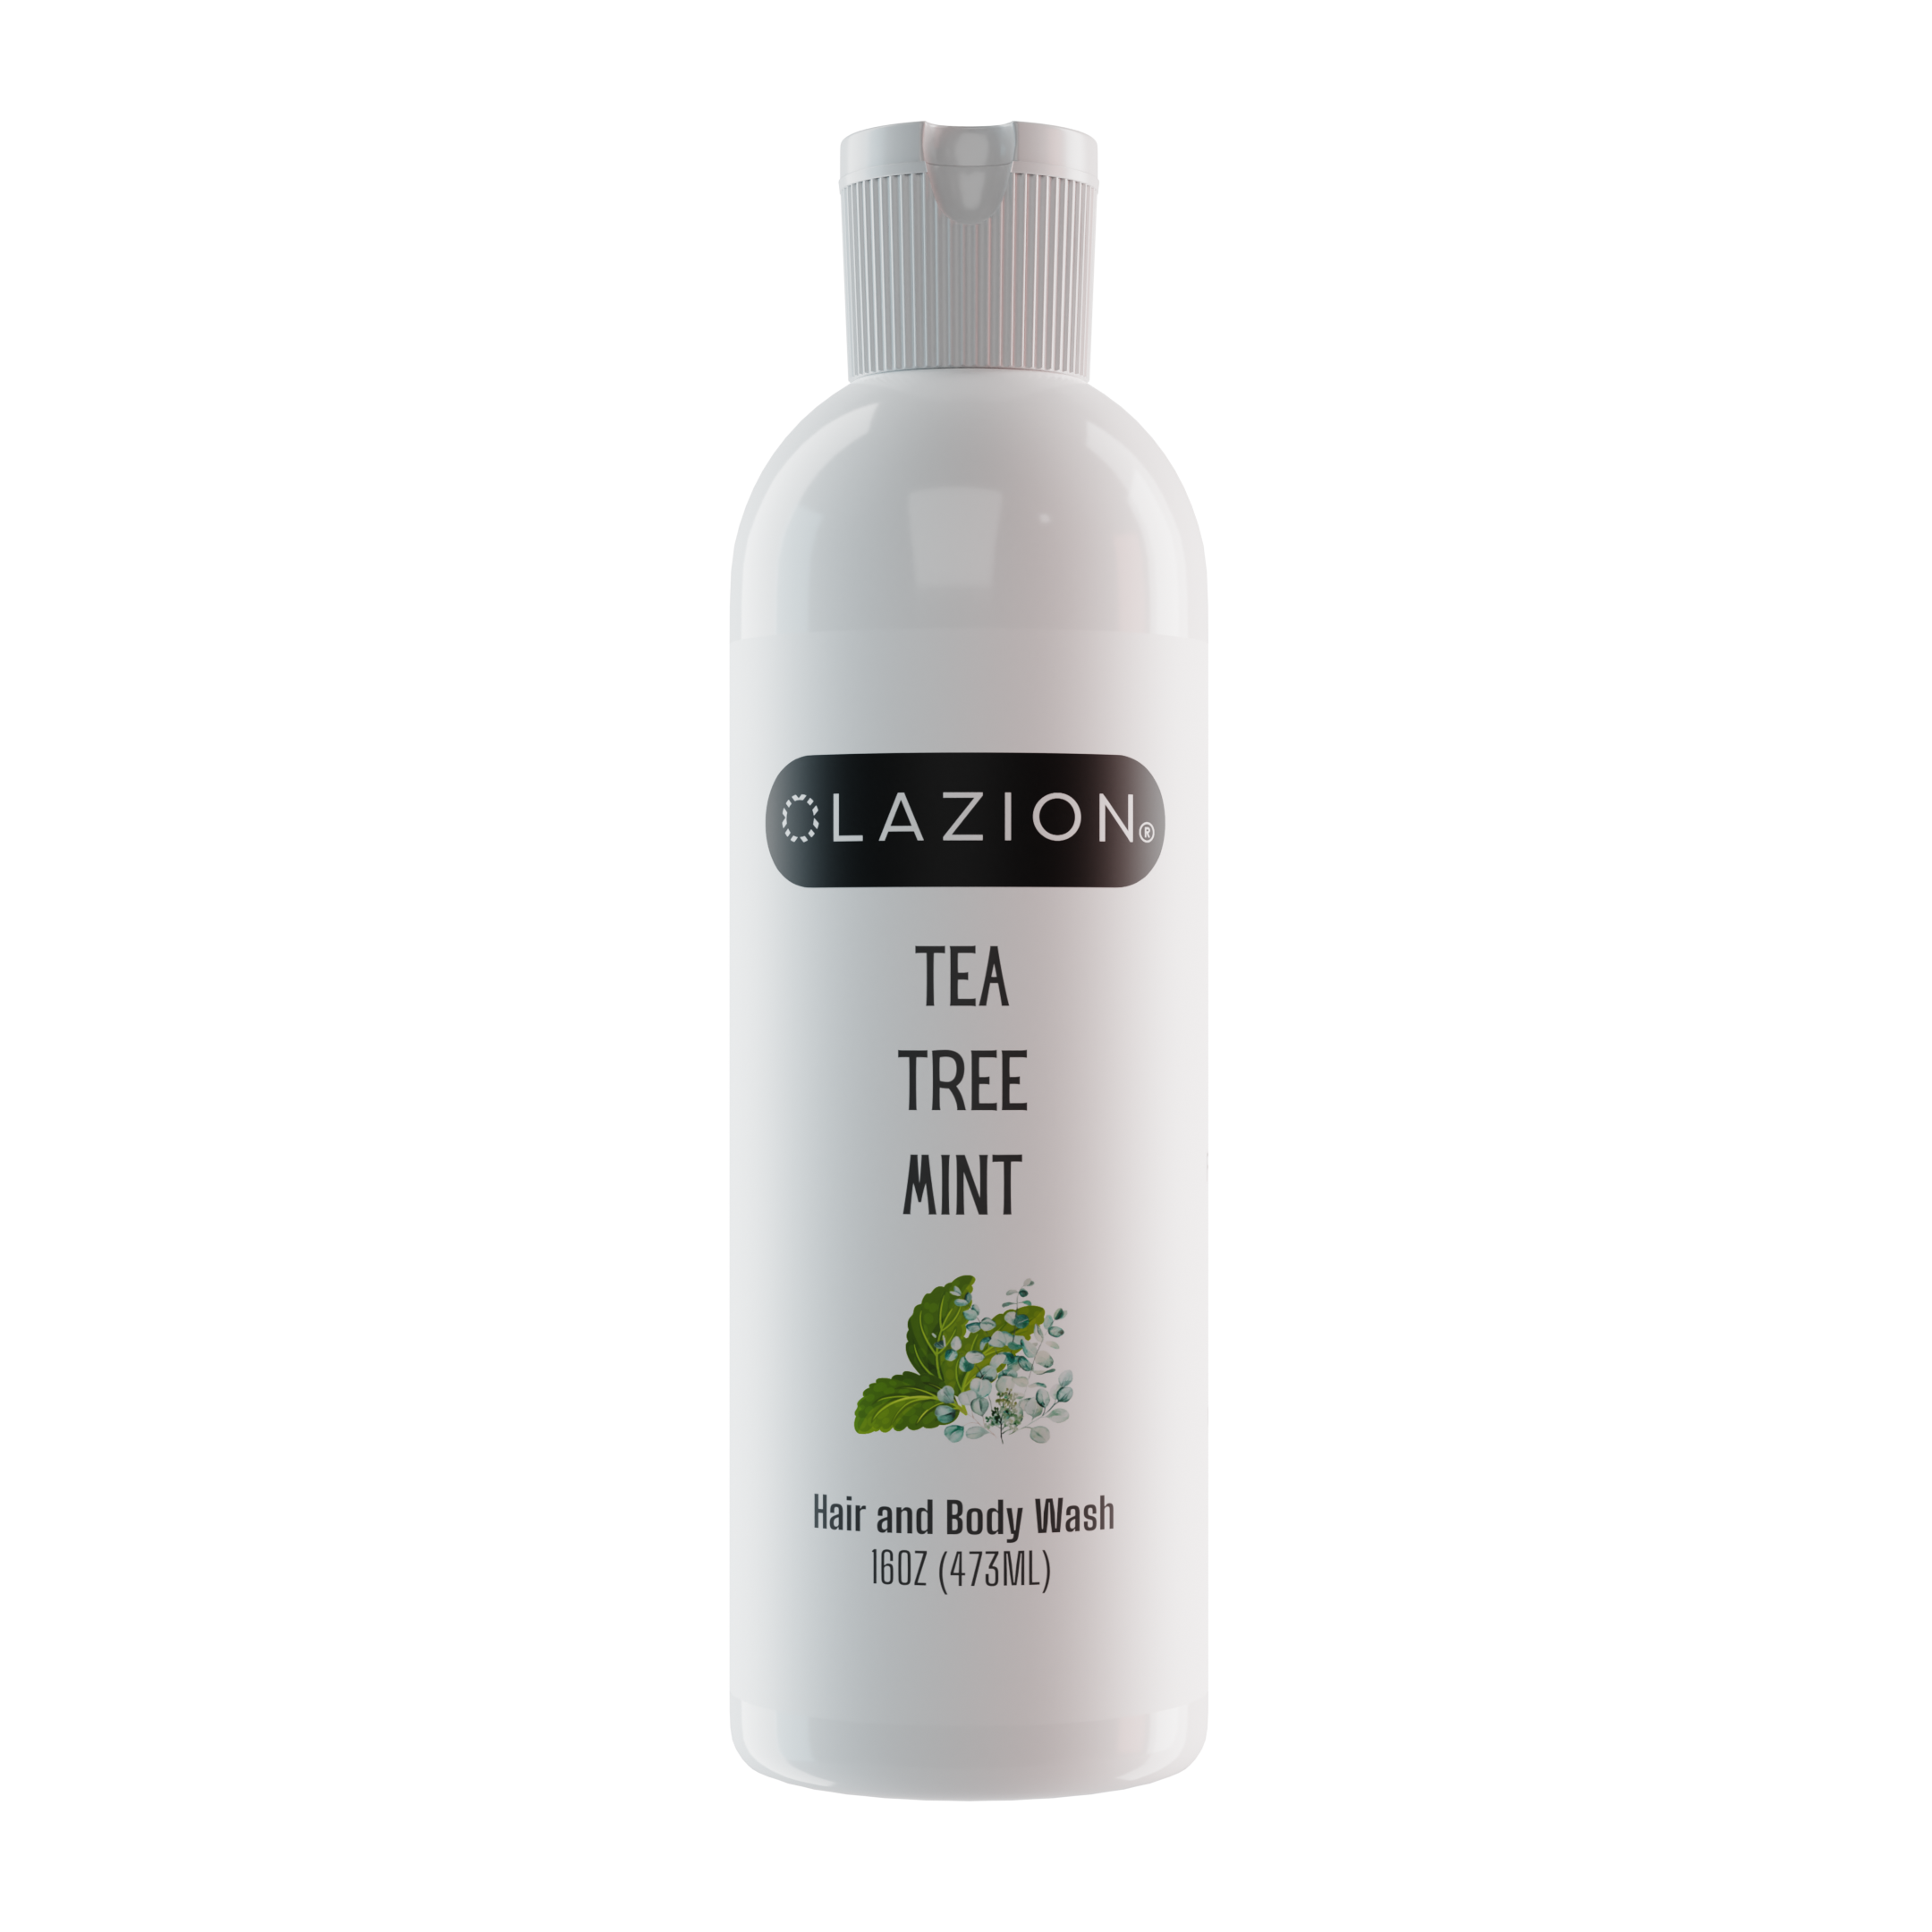 Tea Tree Mint All Natural "Vegan" Body Wash